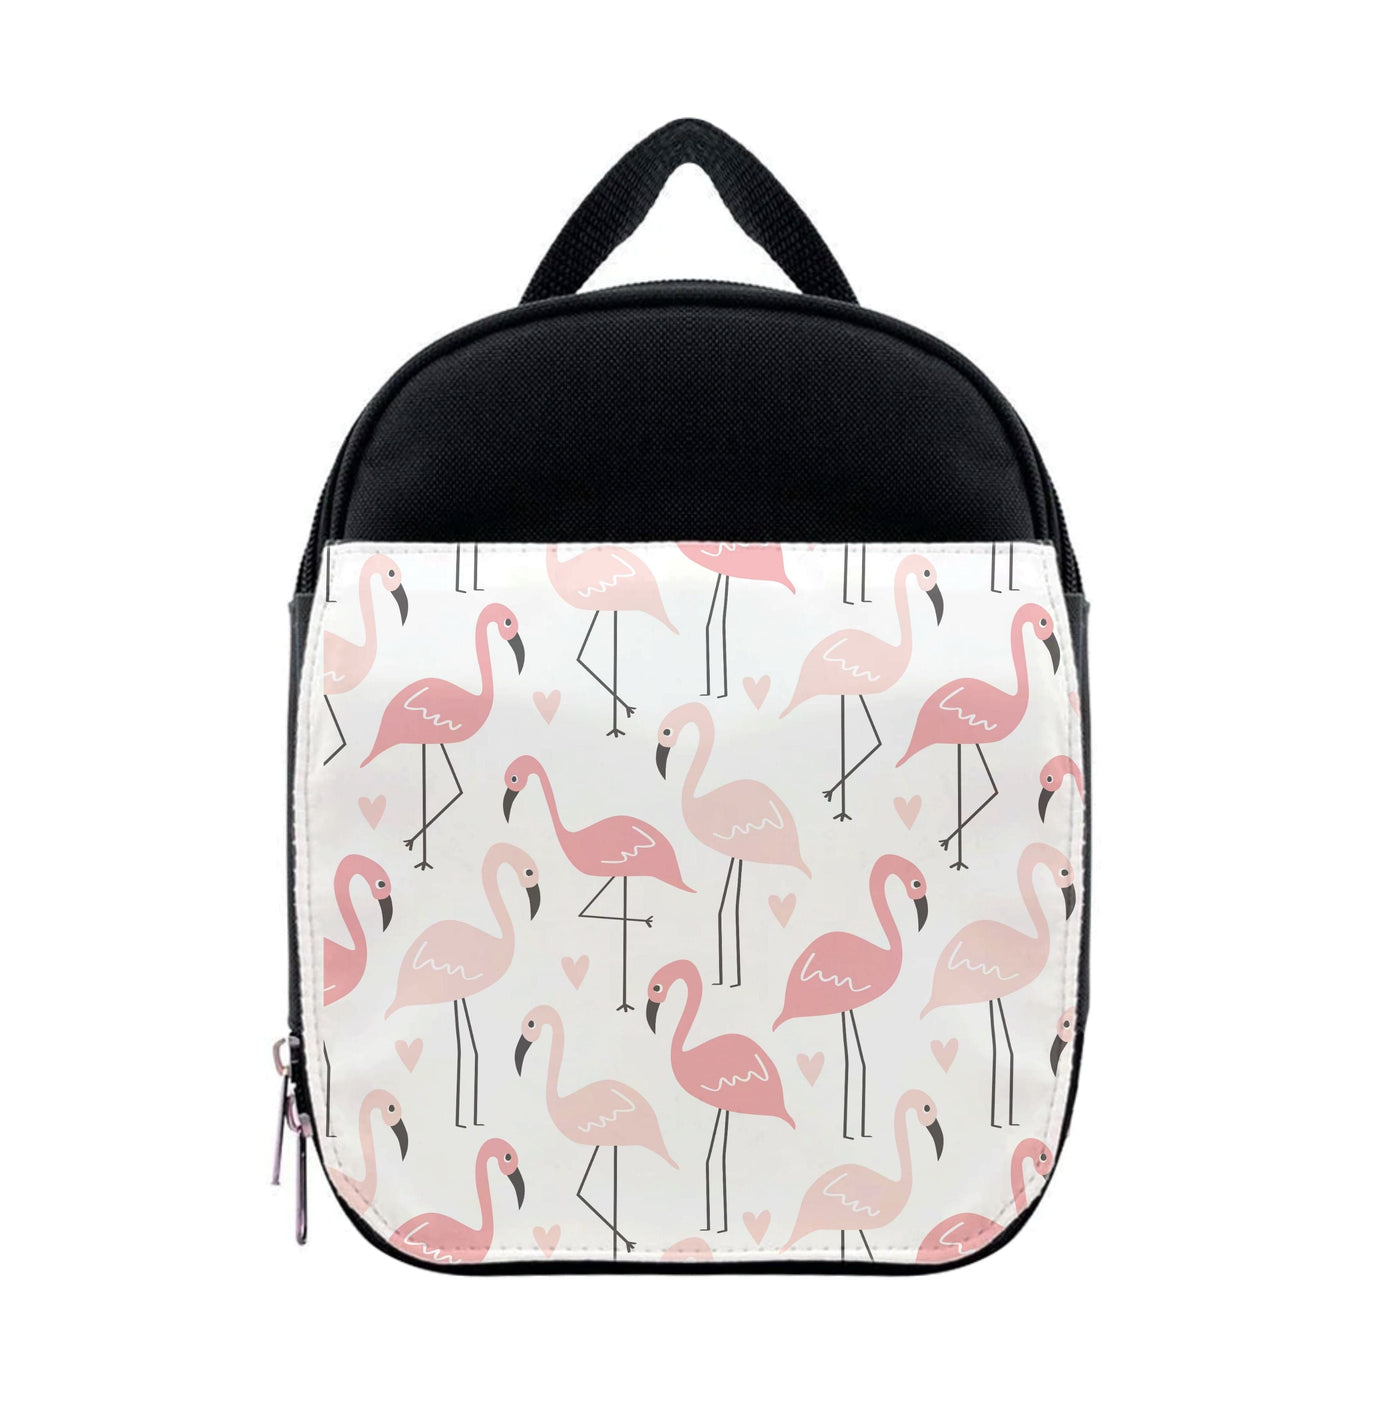 White & Pink Flamingo Pattern Lunchbox